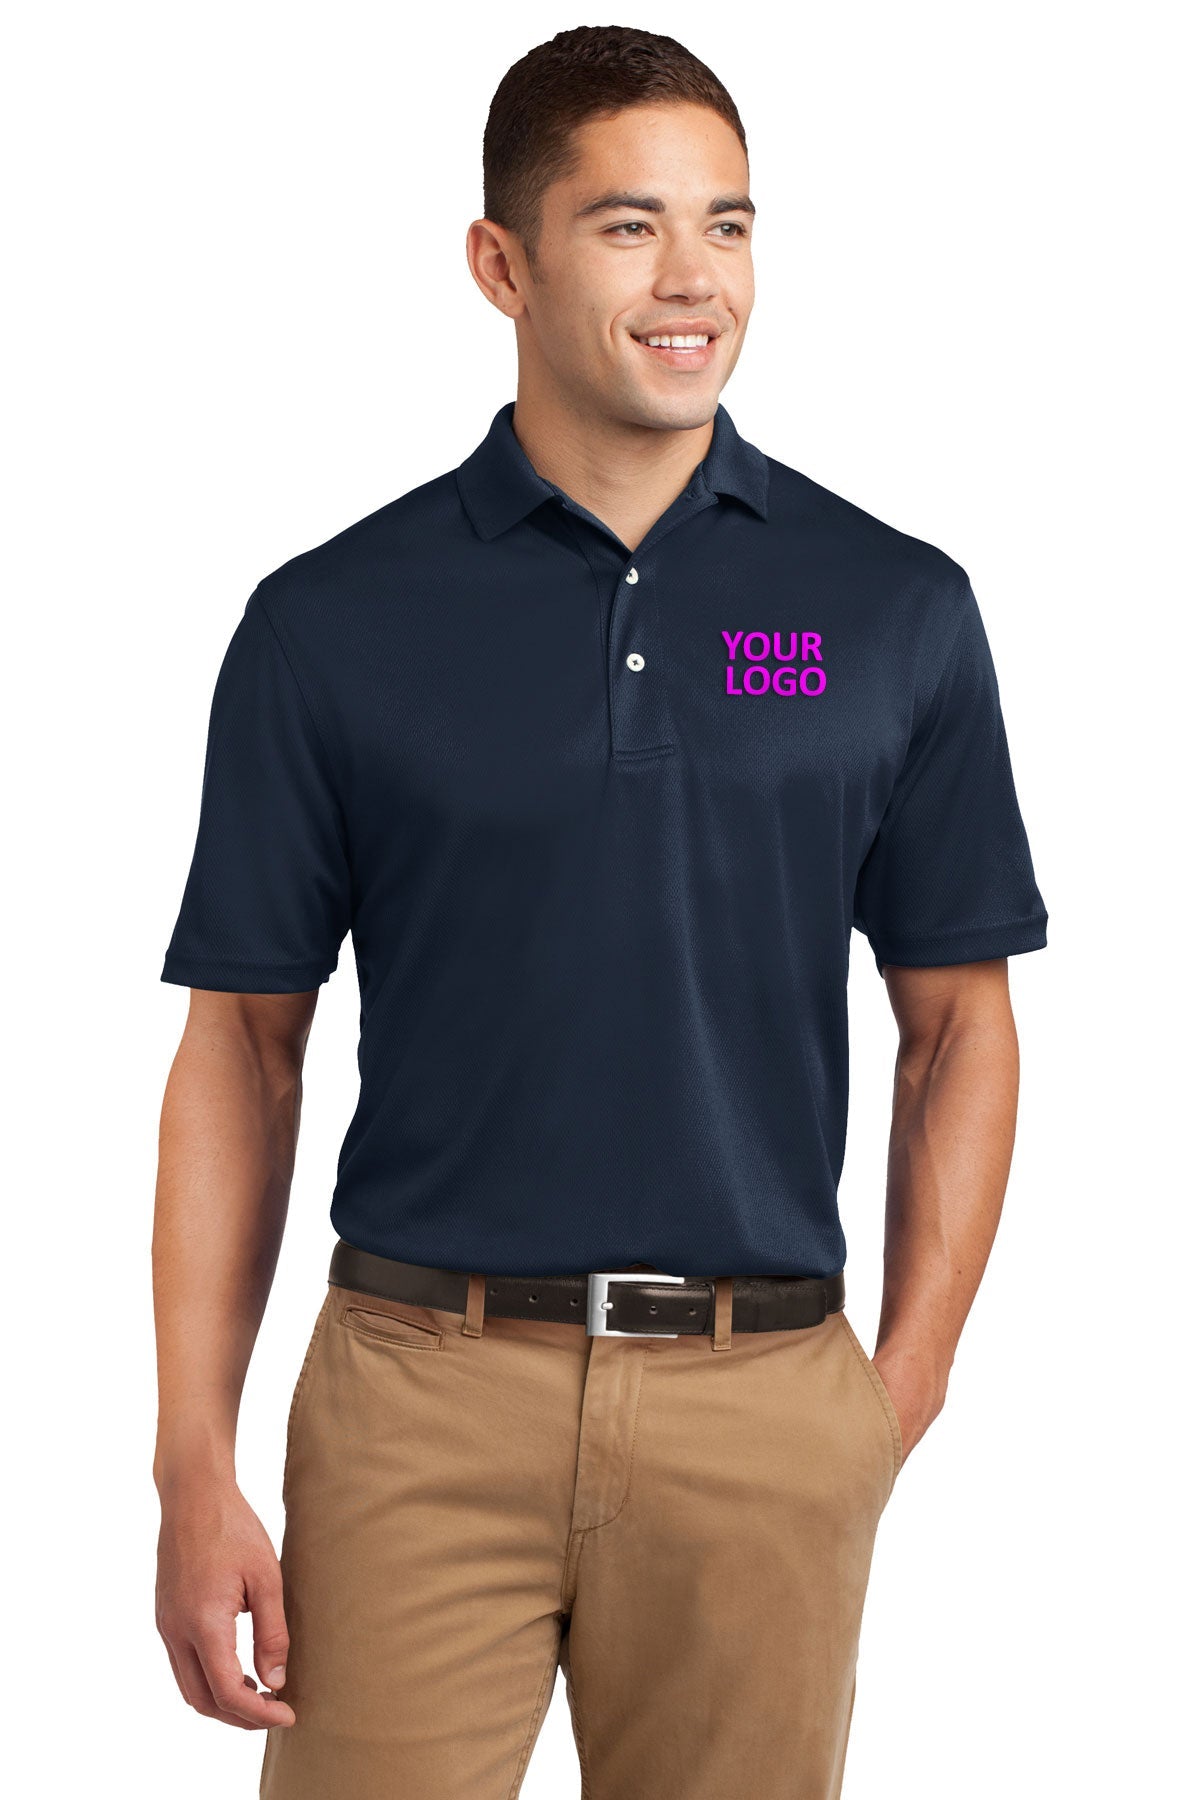 Sport-Tek Navy TK469 quality polo shirts with company logo